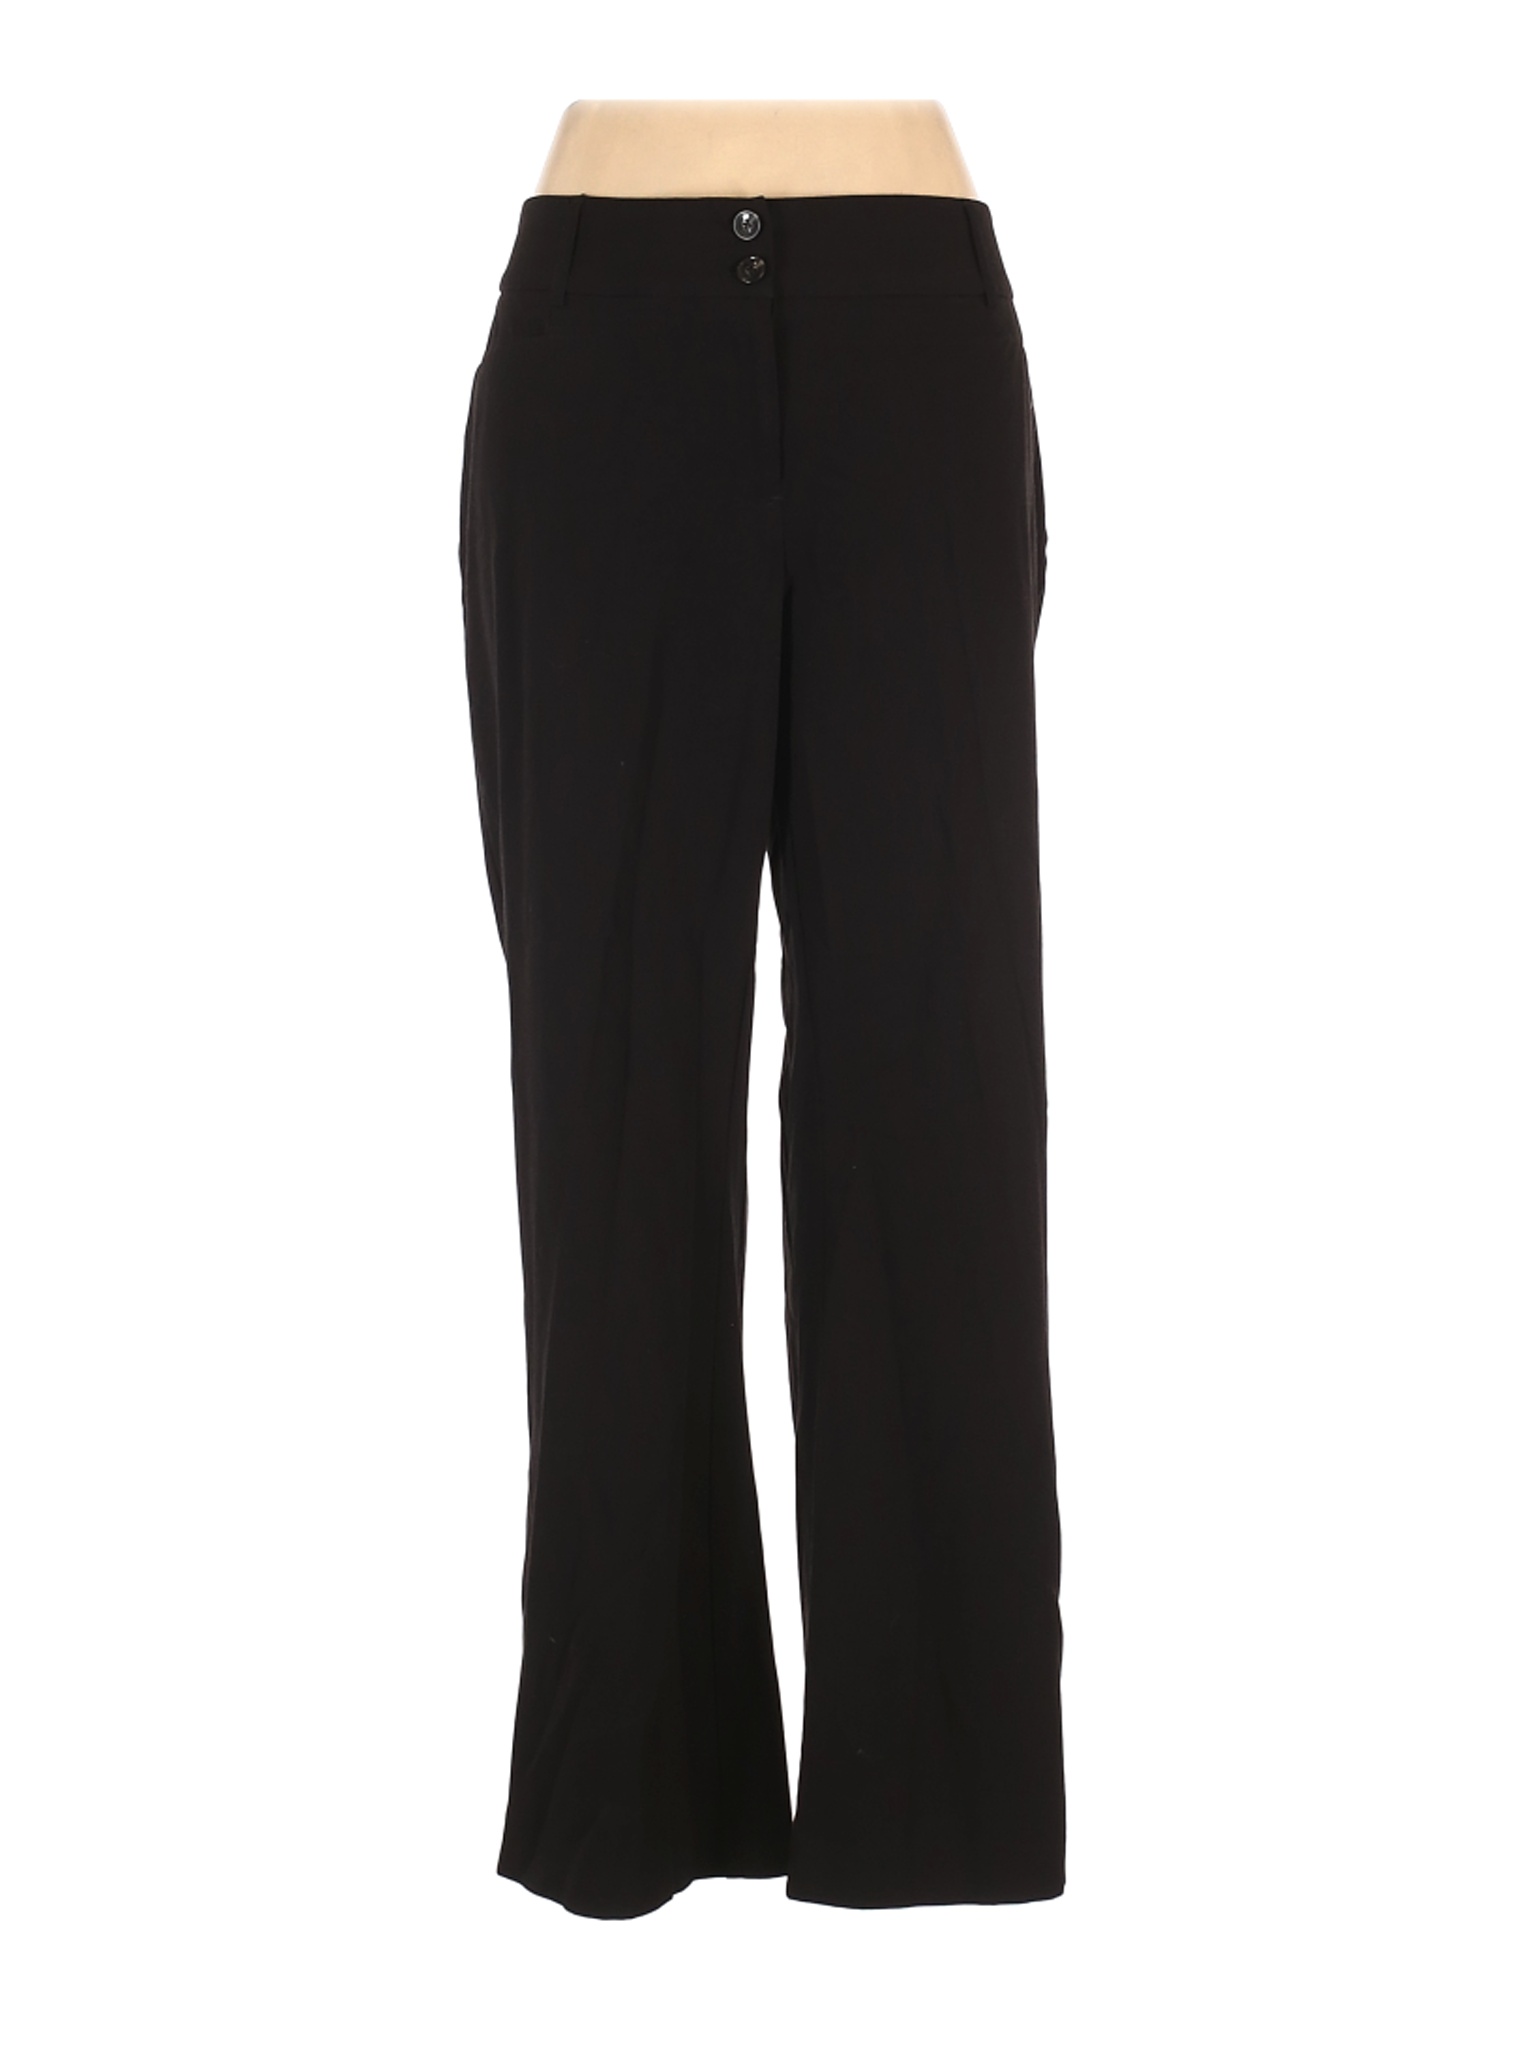 Alfani Women Black Dress Pants 16 | eBay